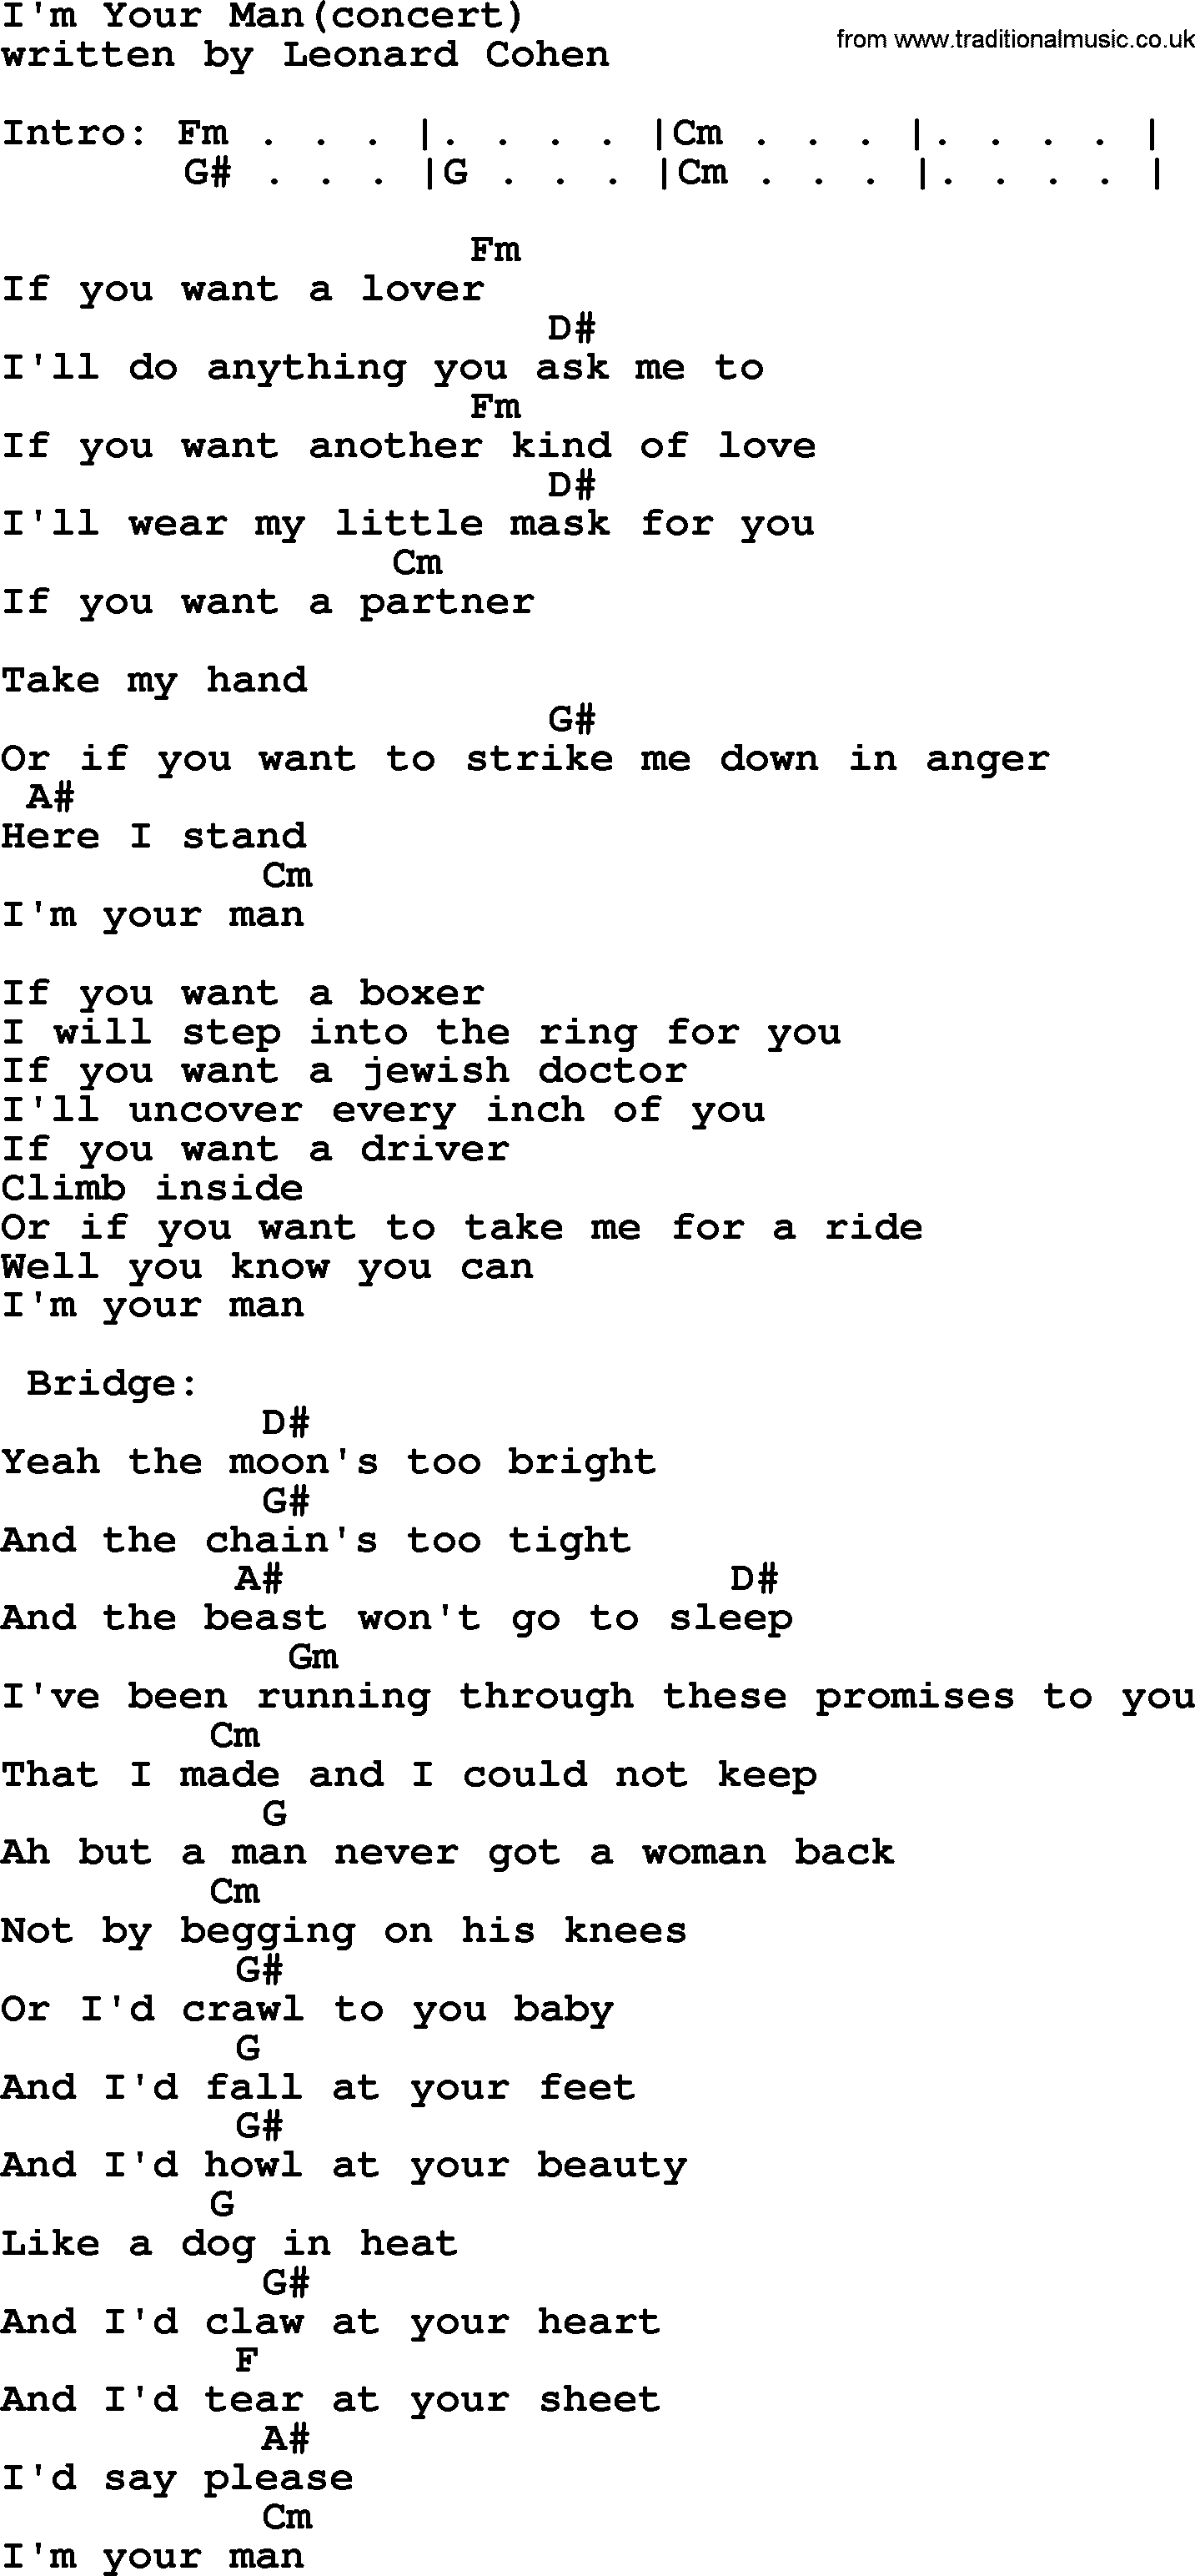 Leonard Cohen song Im Your Man(concert), lyrics and chords